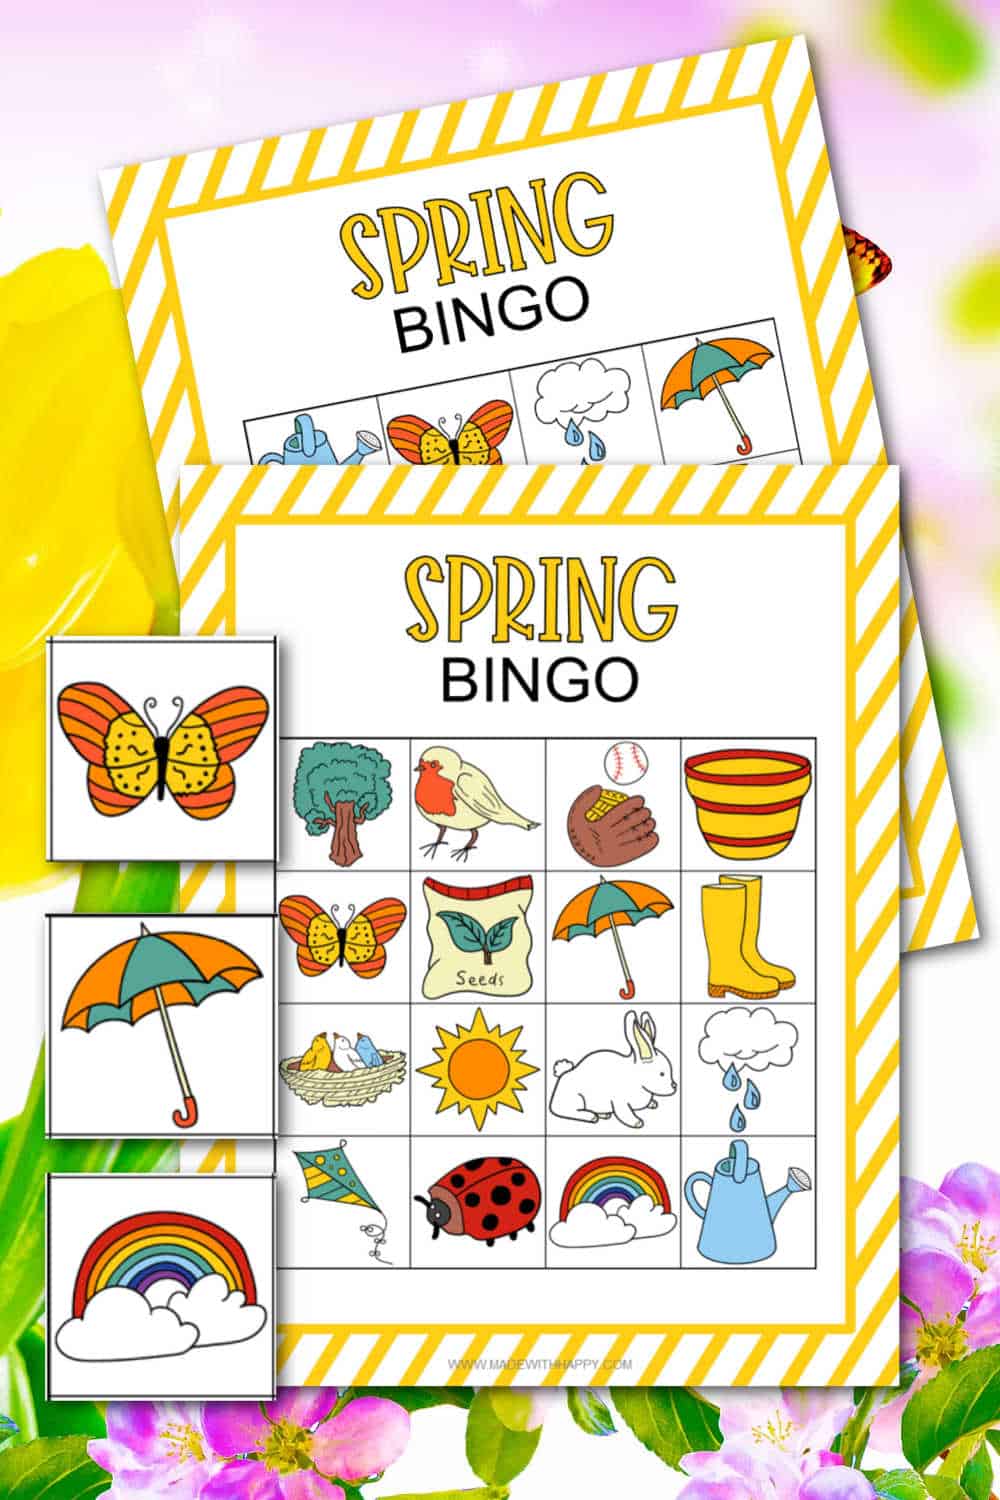 Spring Bingo Printable